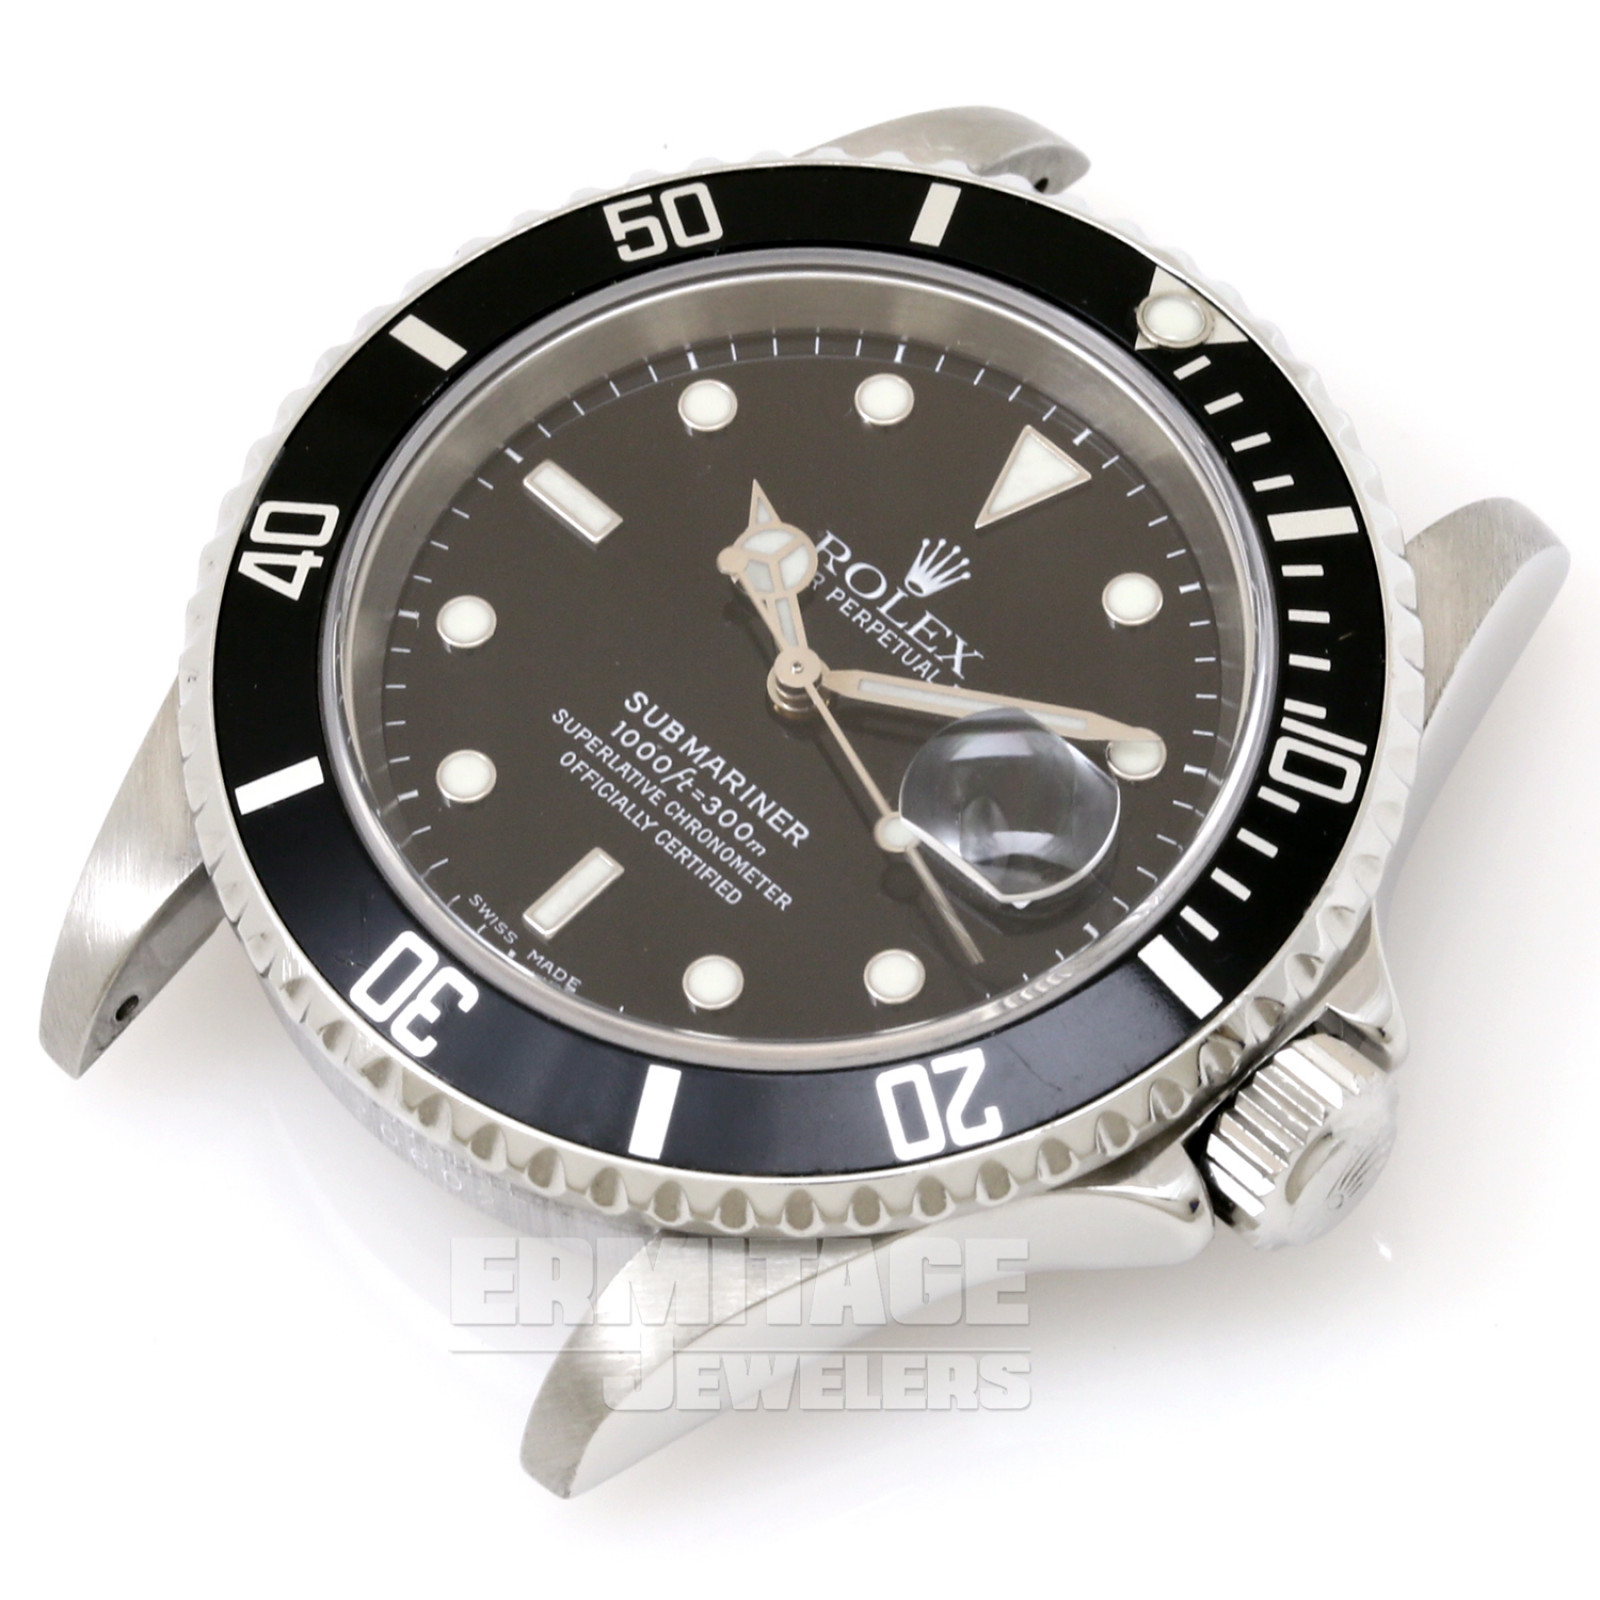 Rolex Submariner 16610 Mint Condition Full Set